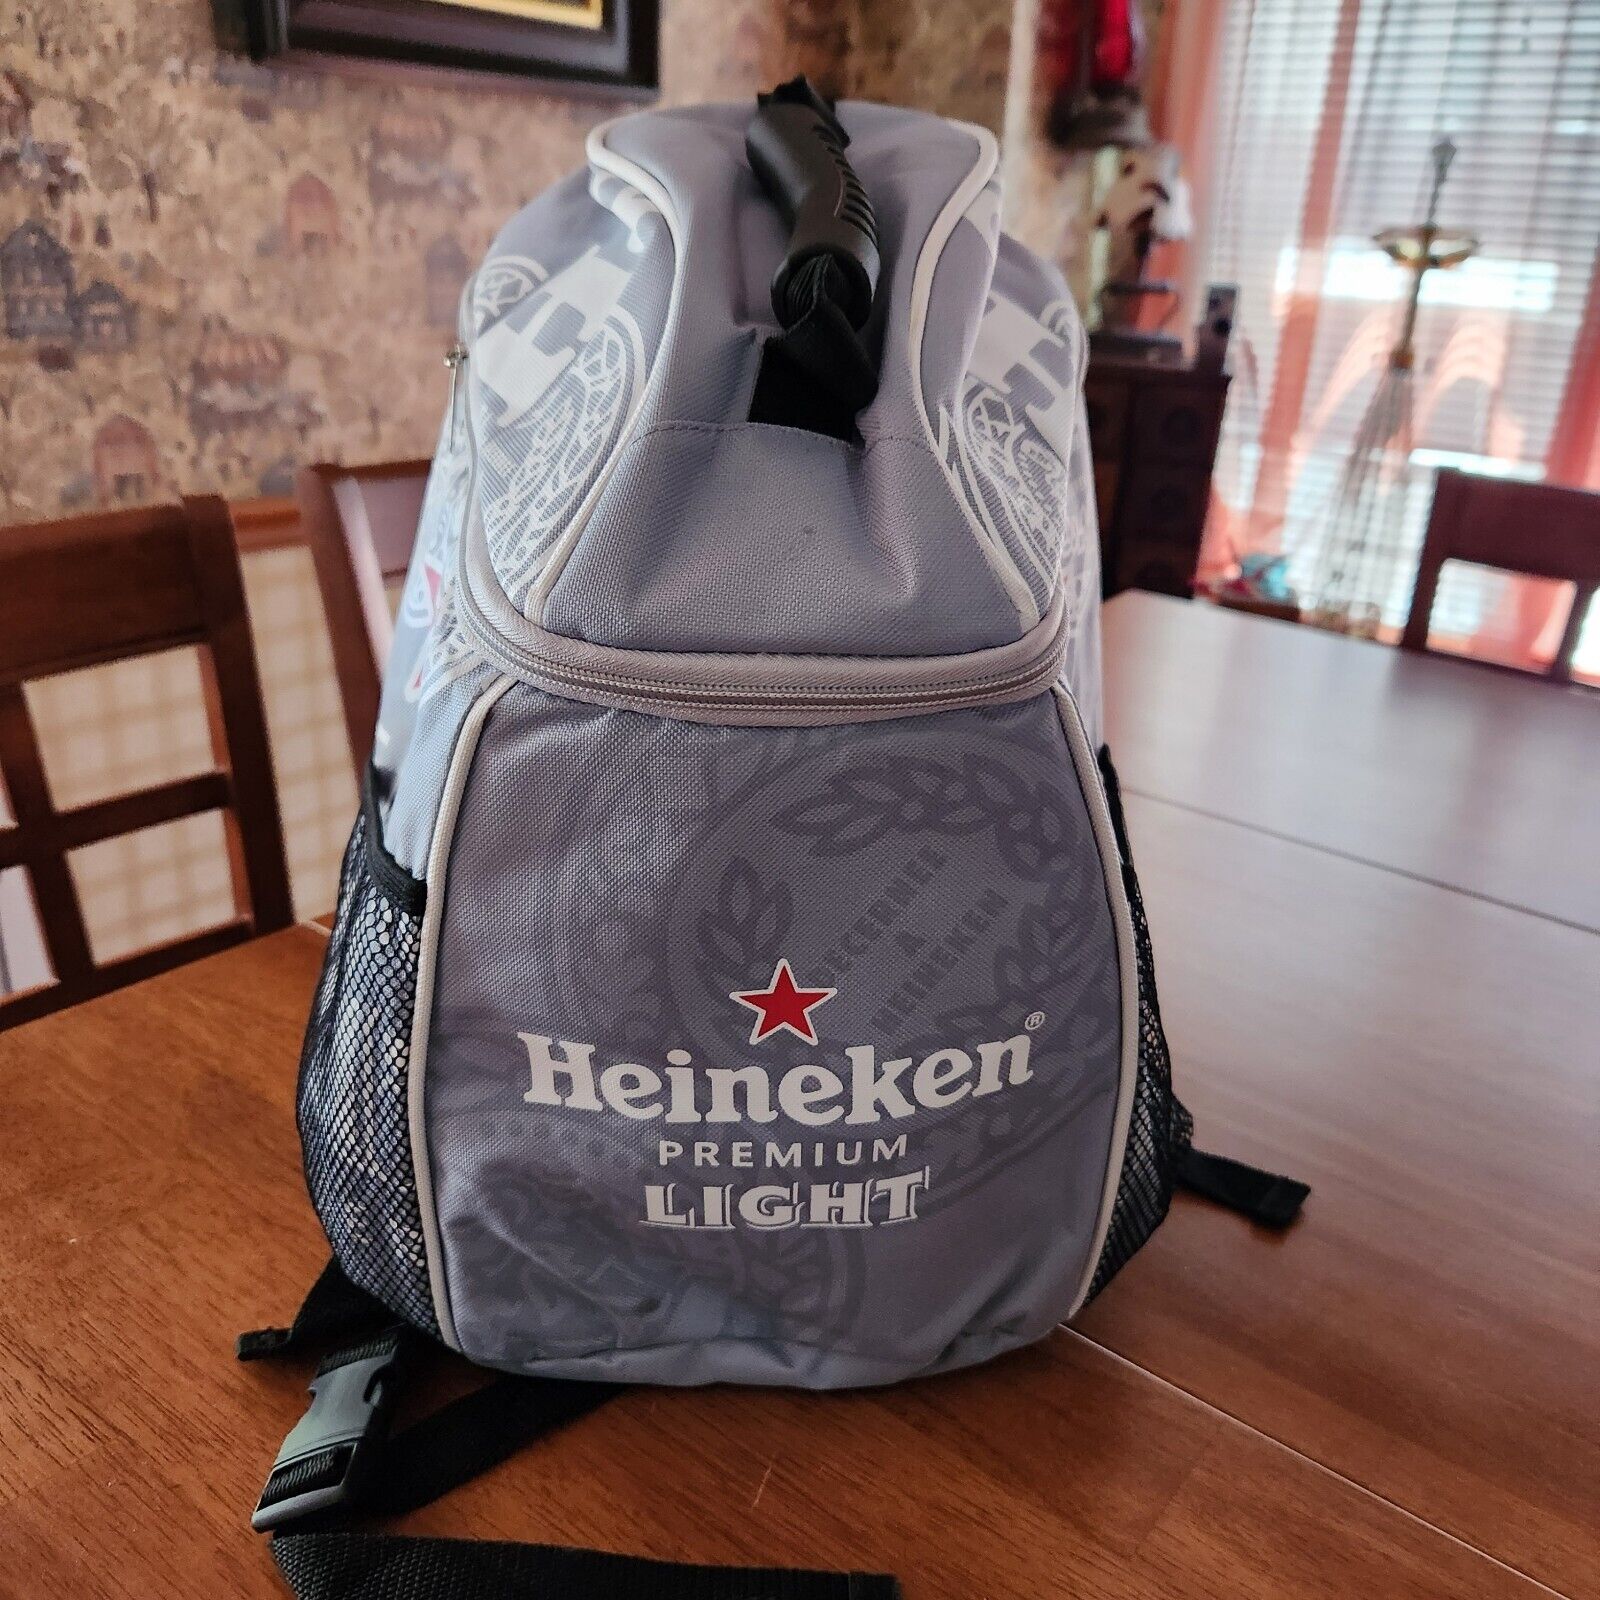 Heineken Light Beer Insulated Backpack Beer Cooler Container Mini Keg Bag